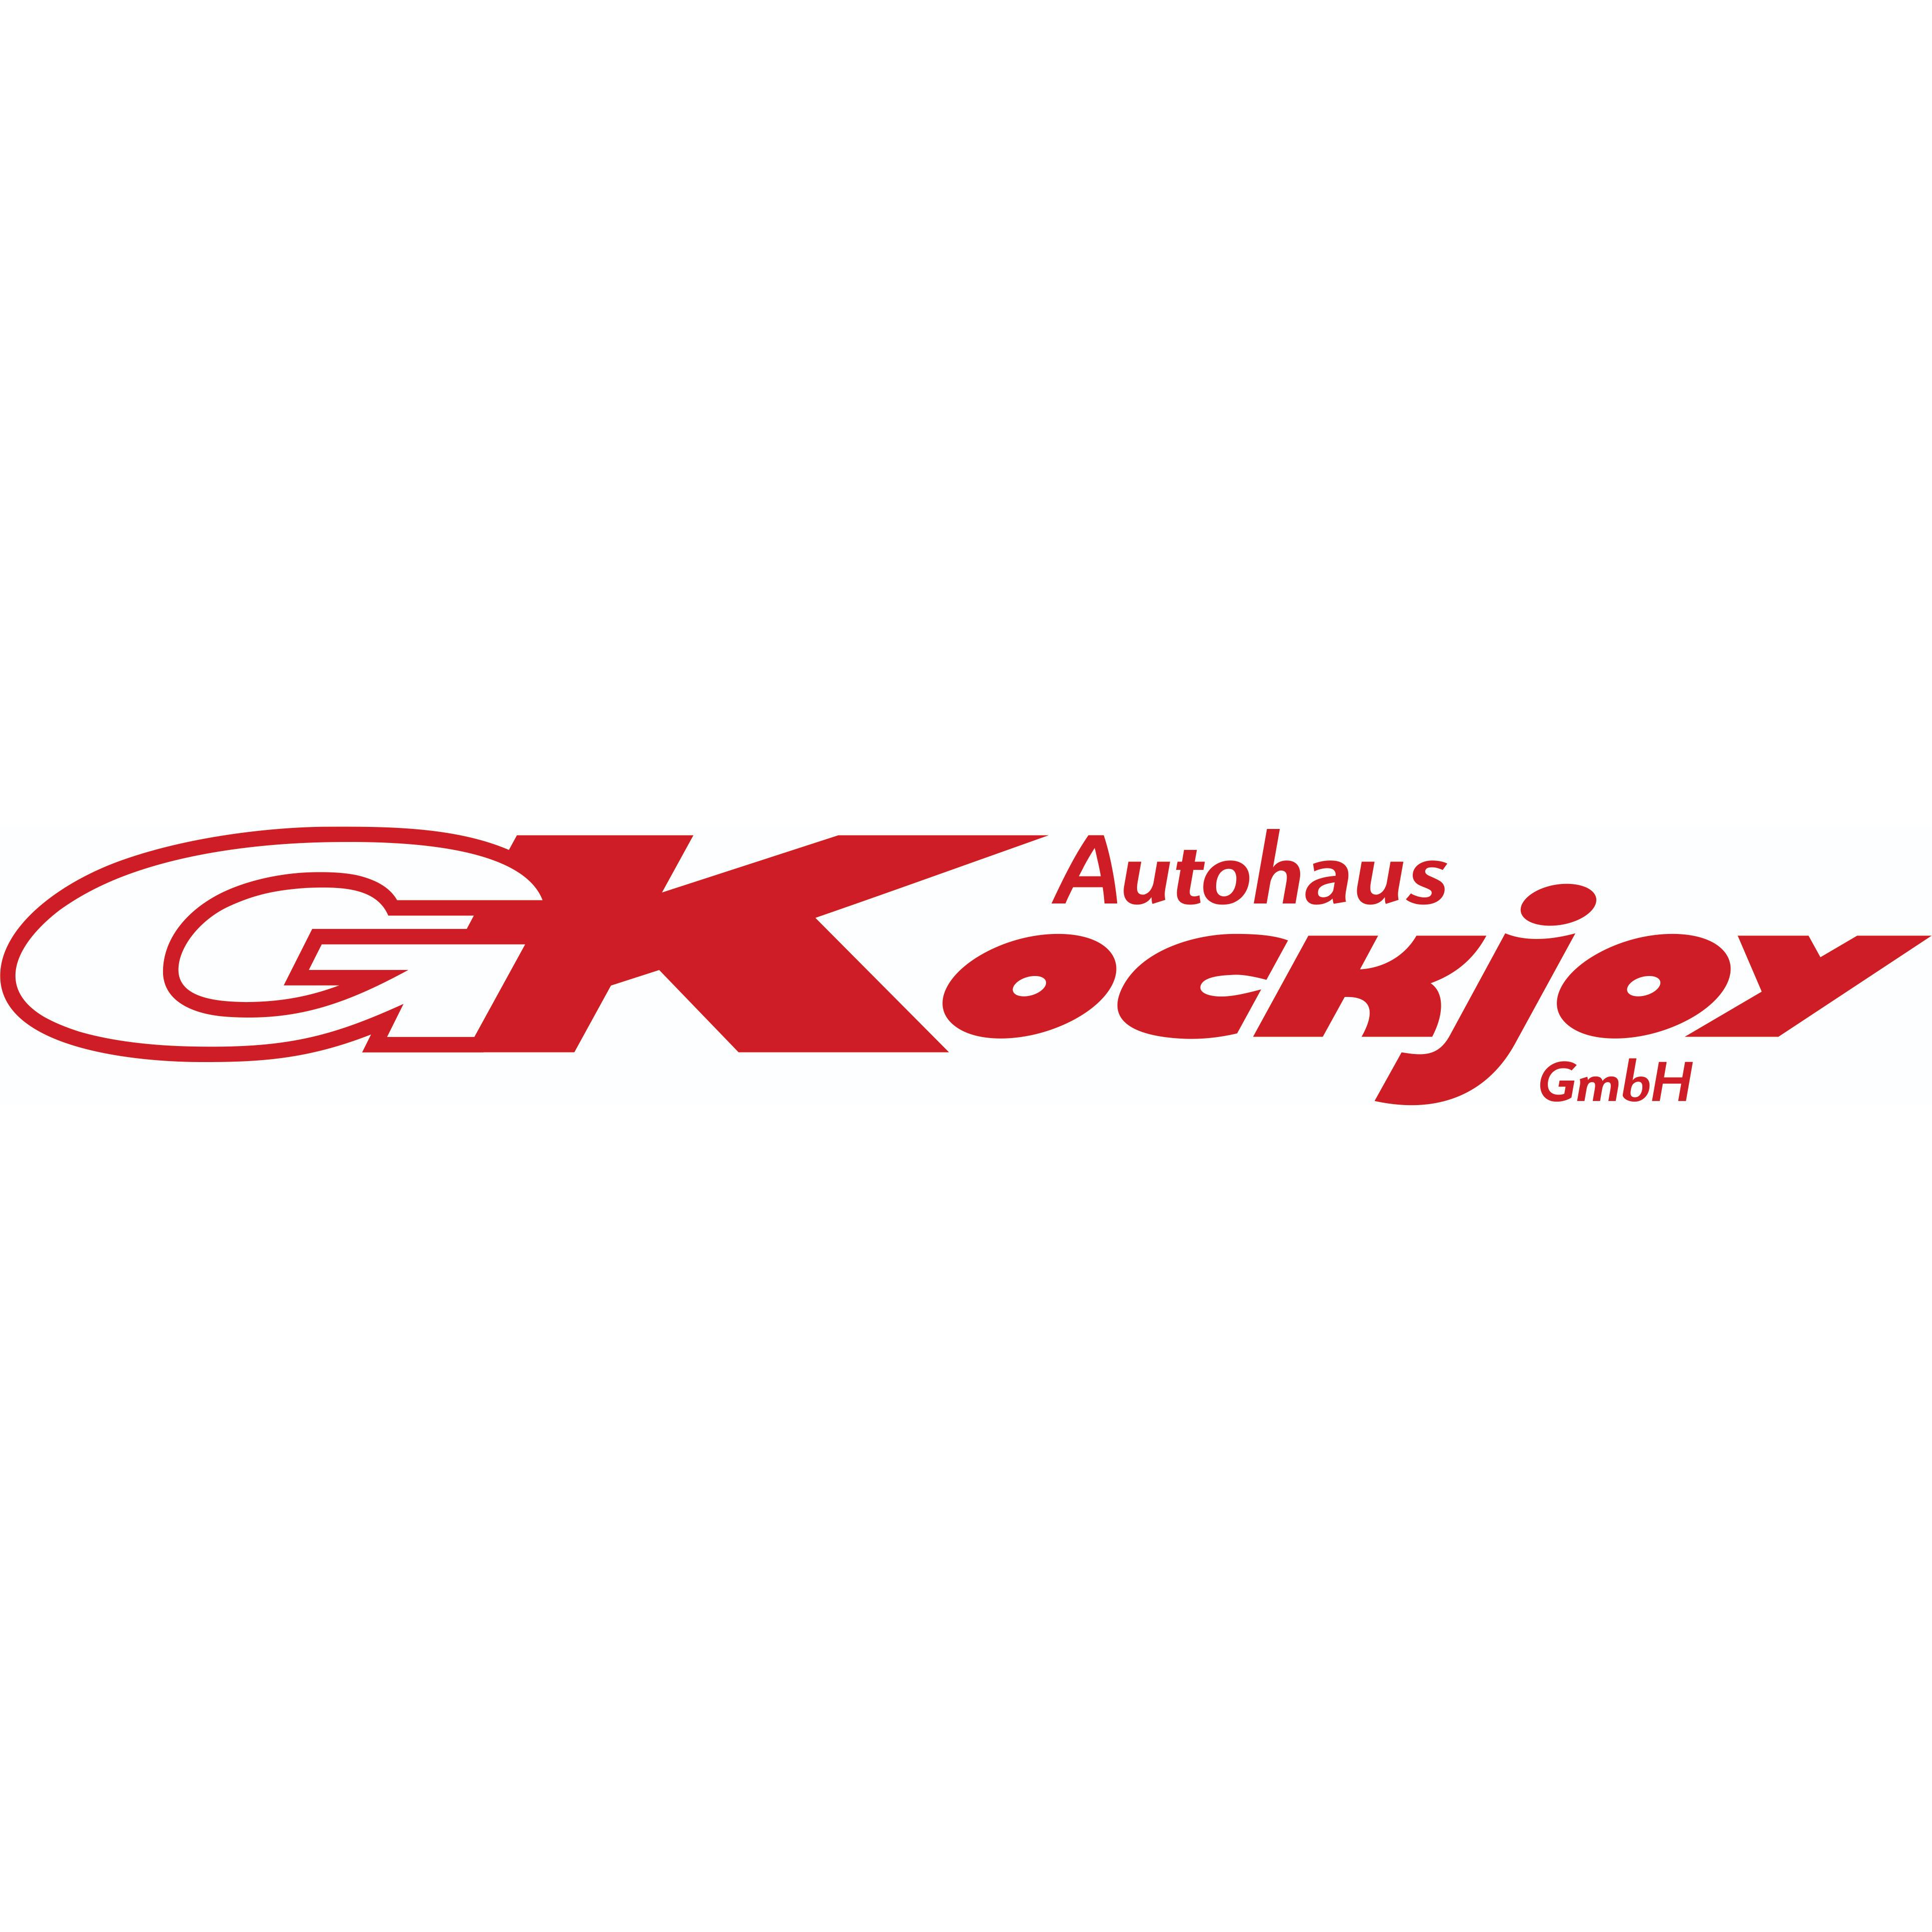 Autohaus Gerhard Kockjoy GmbH (CITROËN-Vertragshändler) in Potsdam - Logo